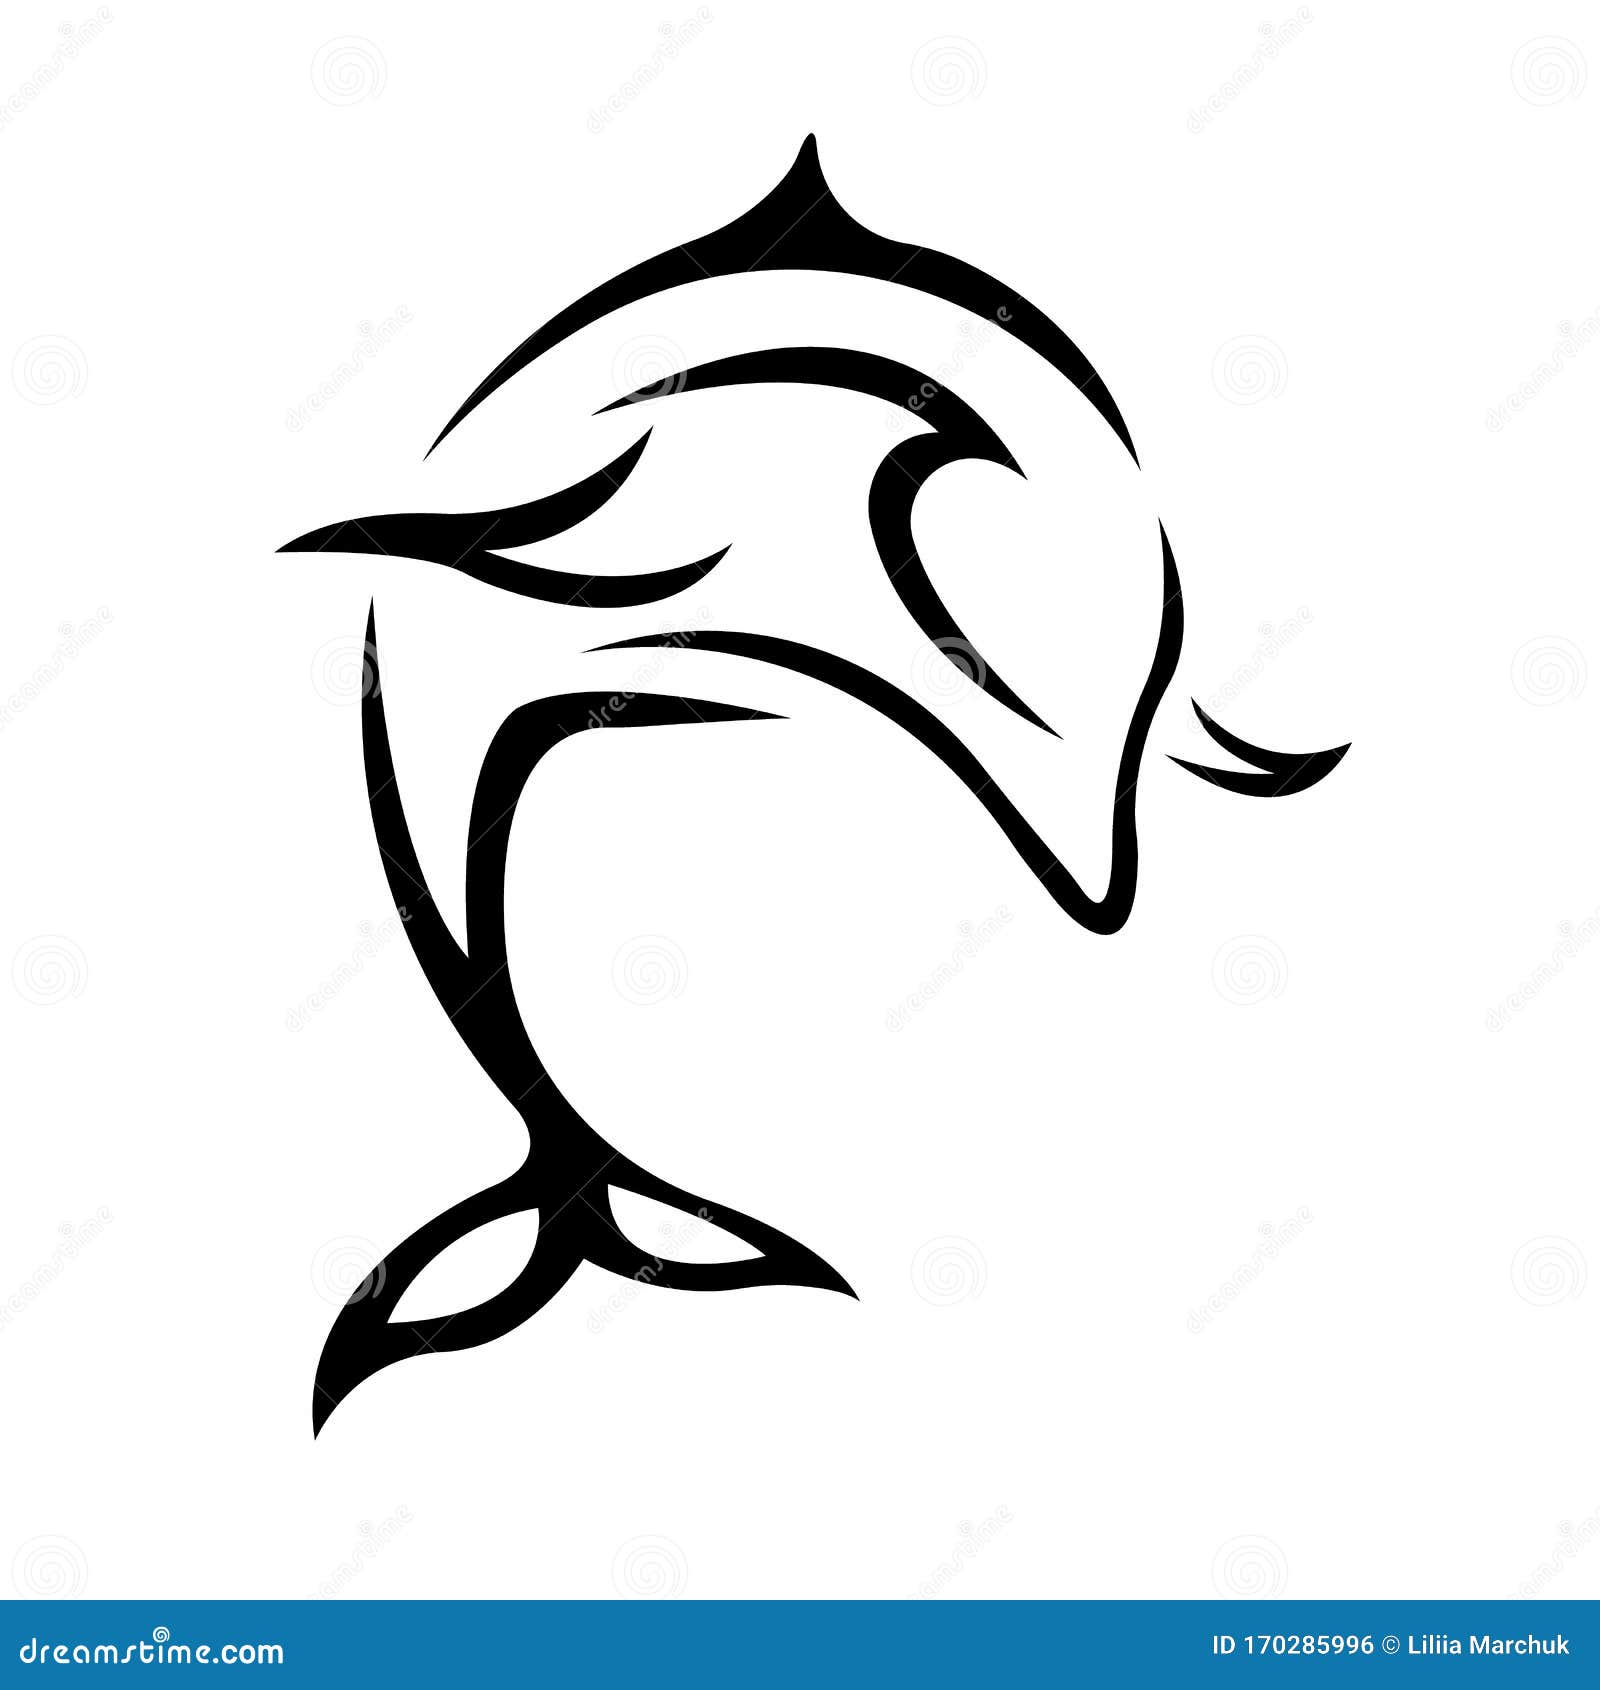 Amazon.com: Azeeda Large 'Jumping Dolphins' Temporary Tattoo (TO00028496) :  Everything Else